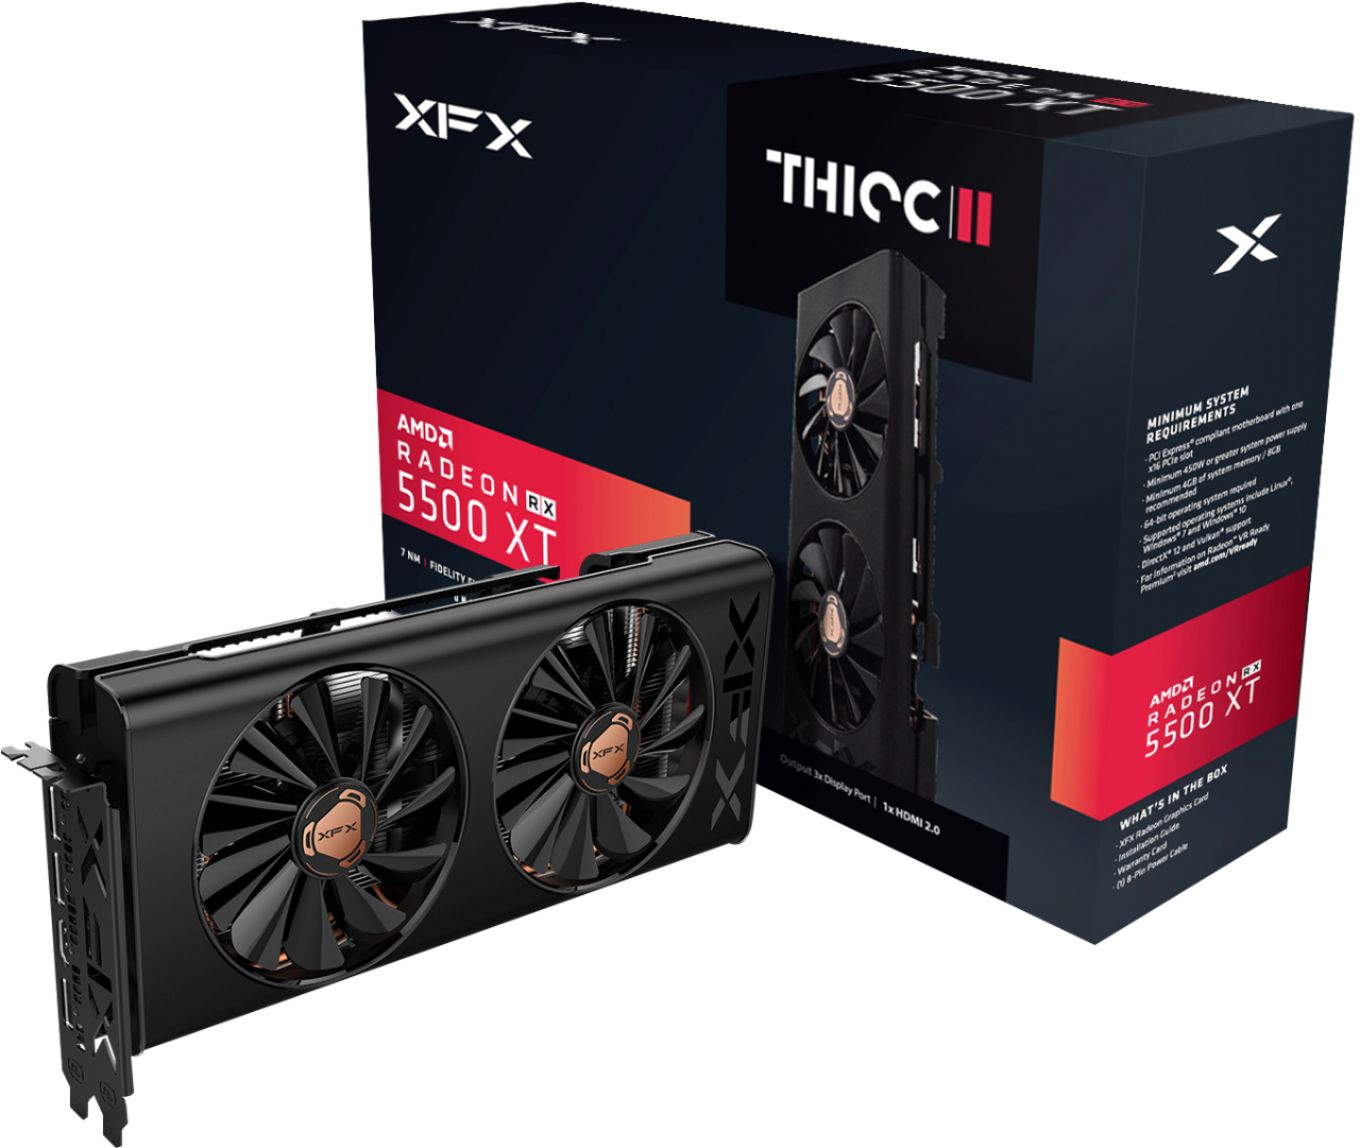 Rent to own XFX - THICC II Pro AMD Radeon RX 5500 XT 8GB GDDR6 PCI Express 4.0 Graphics Card - Black